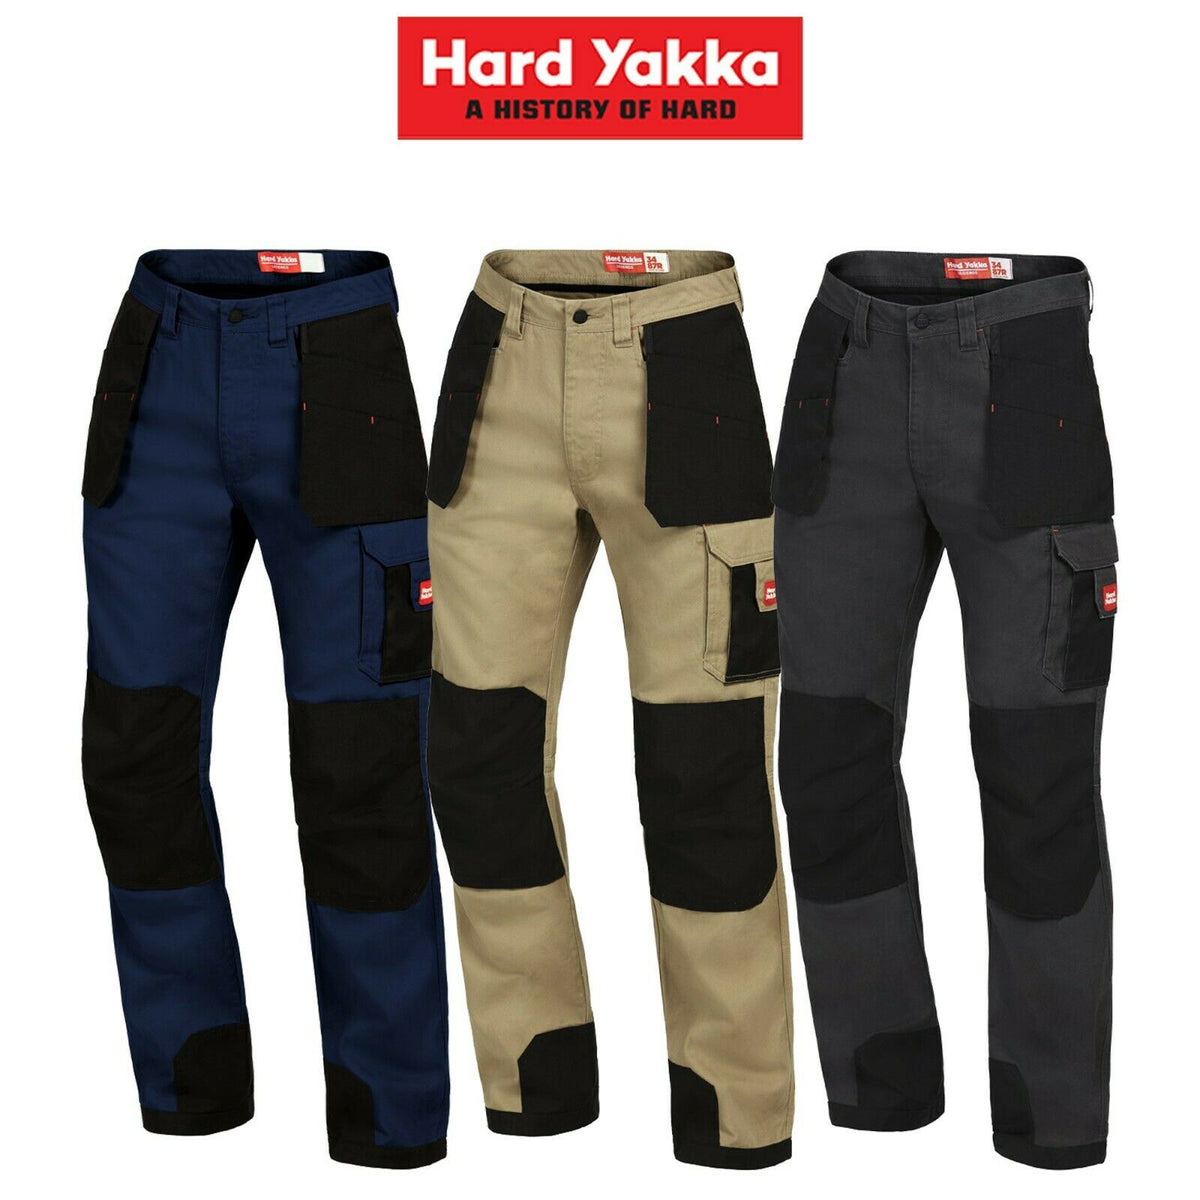 Hard Yakka Xtreme Extreme Legends Work Cargo Tough Pants Heavy Duty Y02210